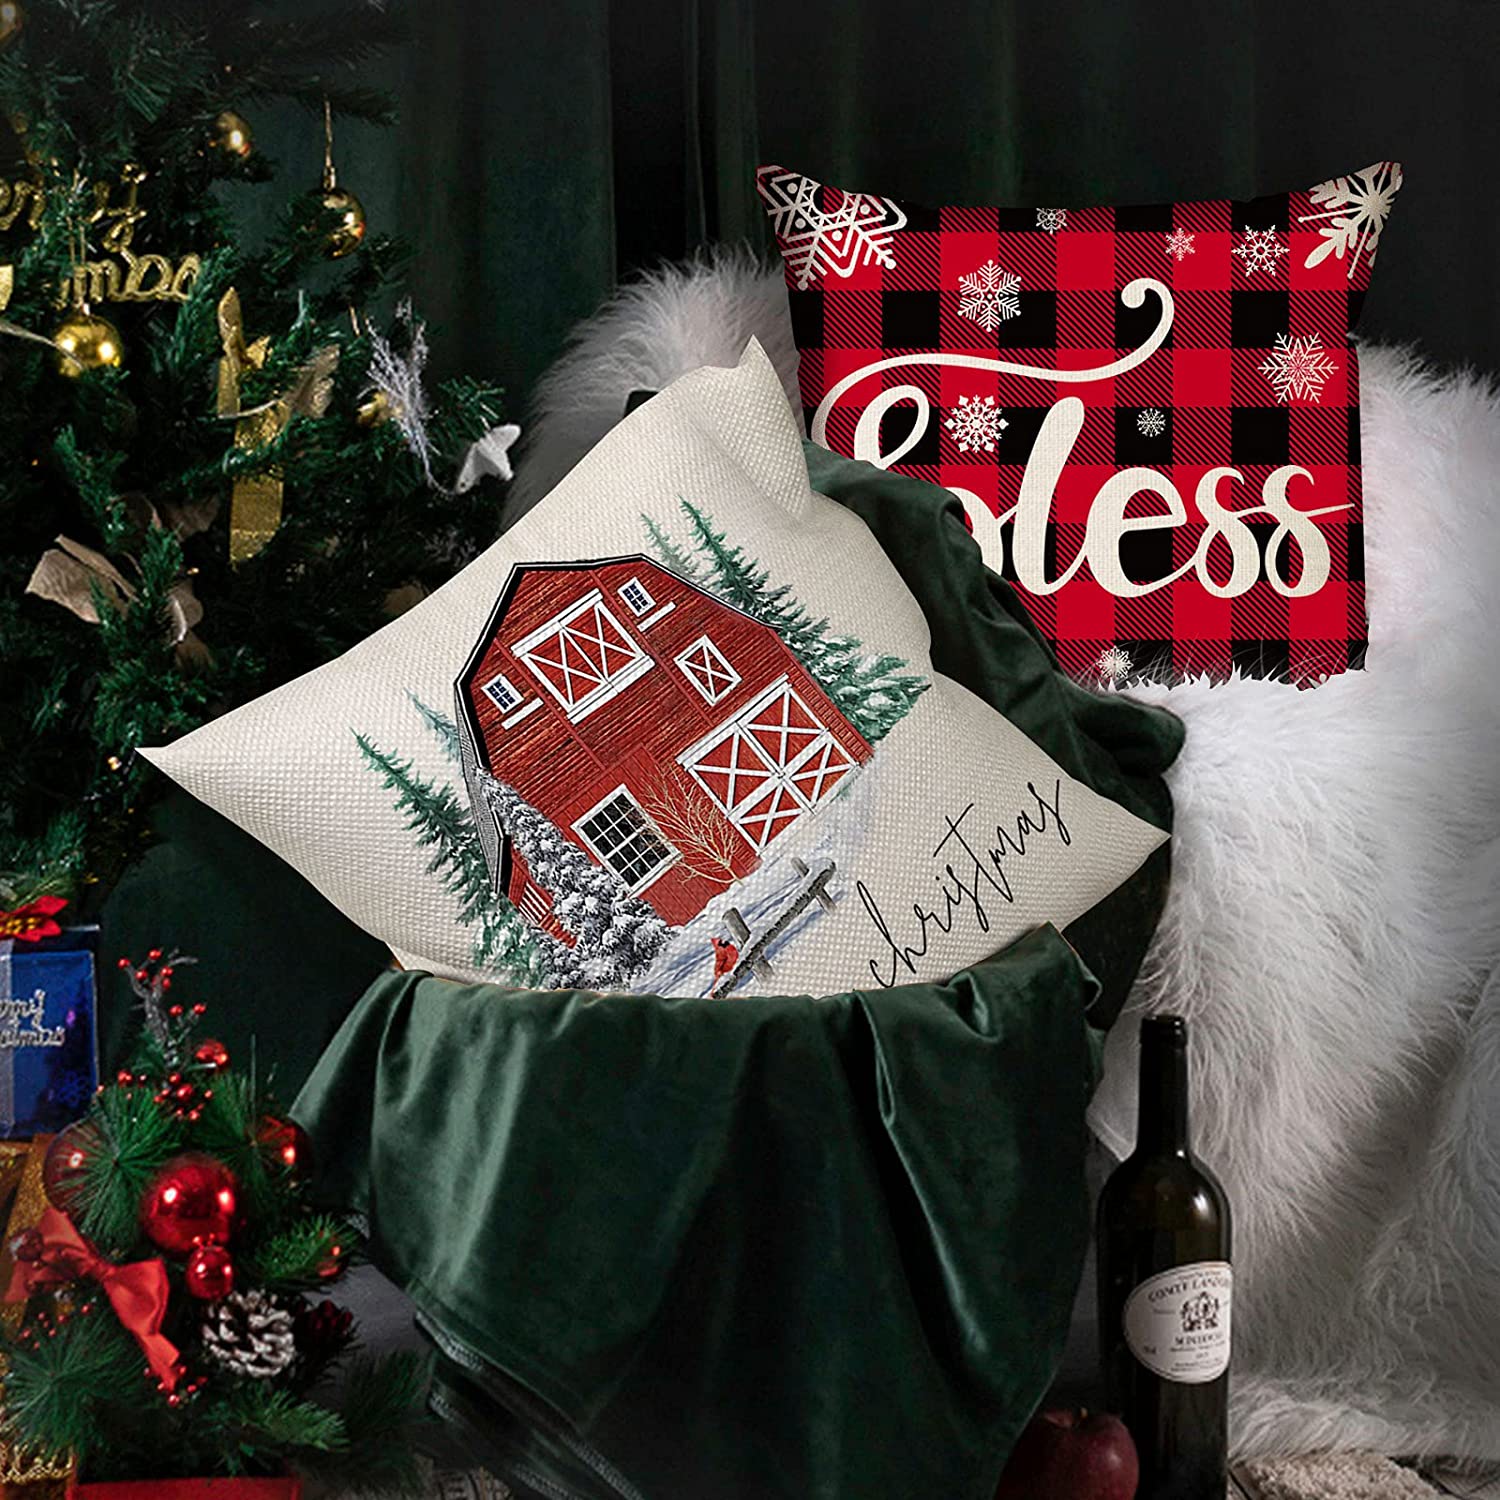 GEEORY Christmas Throw Pillow Covers 18x18 Set of 4 Buffalo Plaid Holl